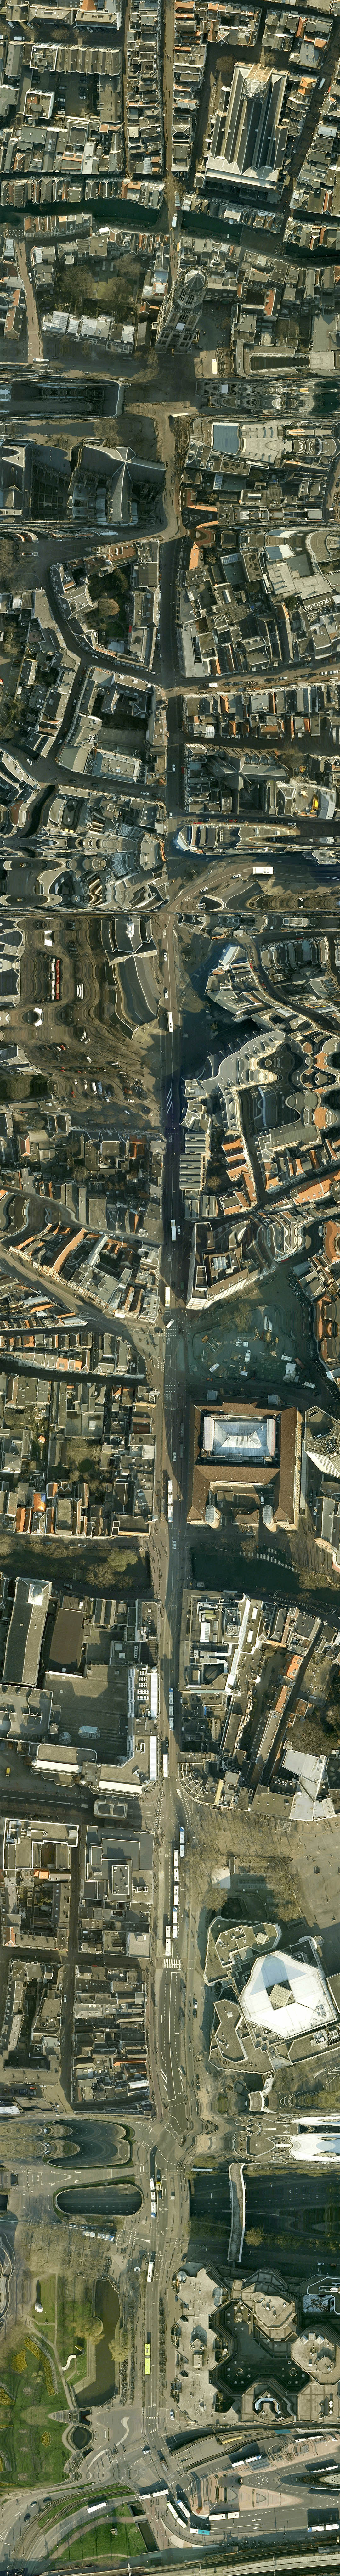 Utrecht: Dom tower to Central station - Immer Geradeaus - Sylvain Vriens